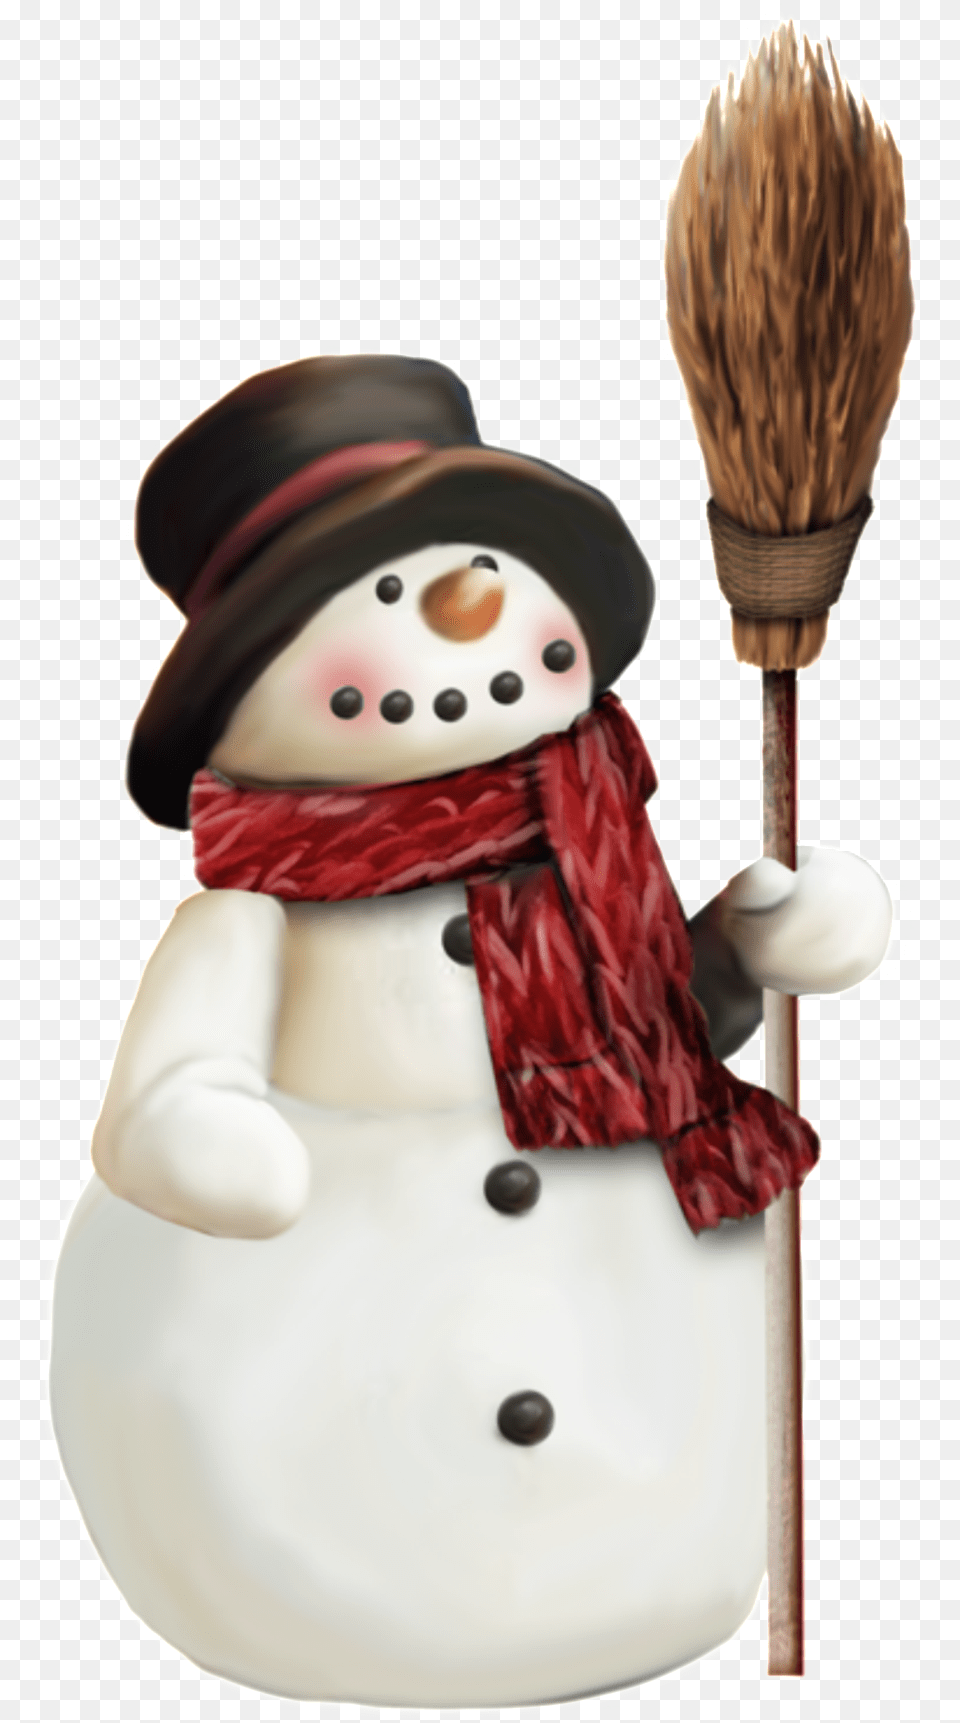 A Transparent Broom Of Snow Material Kardan Adam, Nature, Outdoors, Winter, Snowman Free Png Download